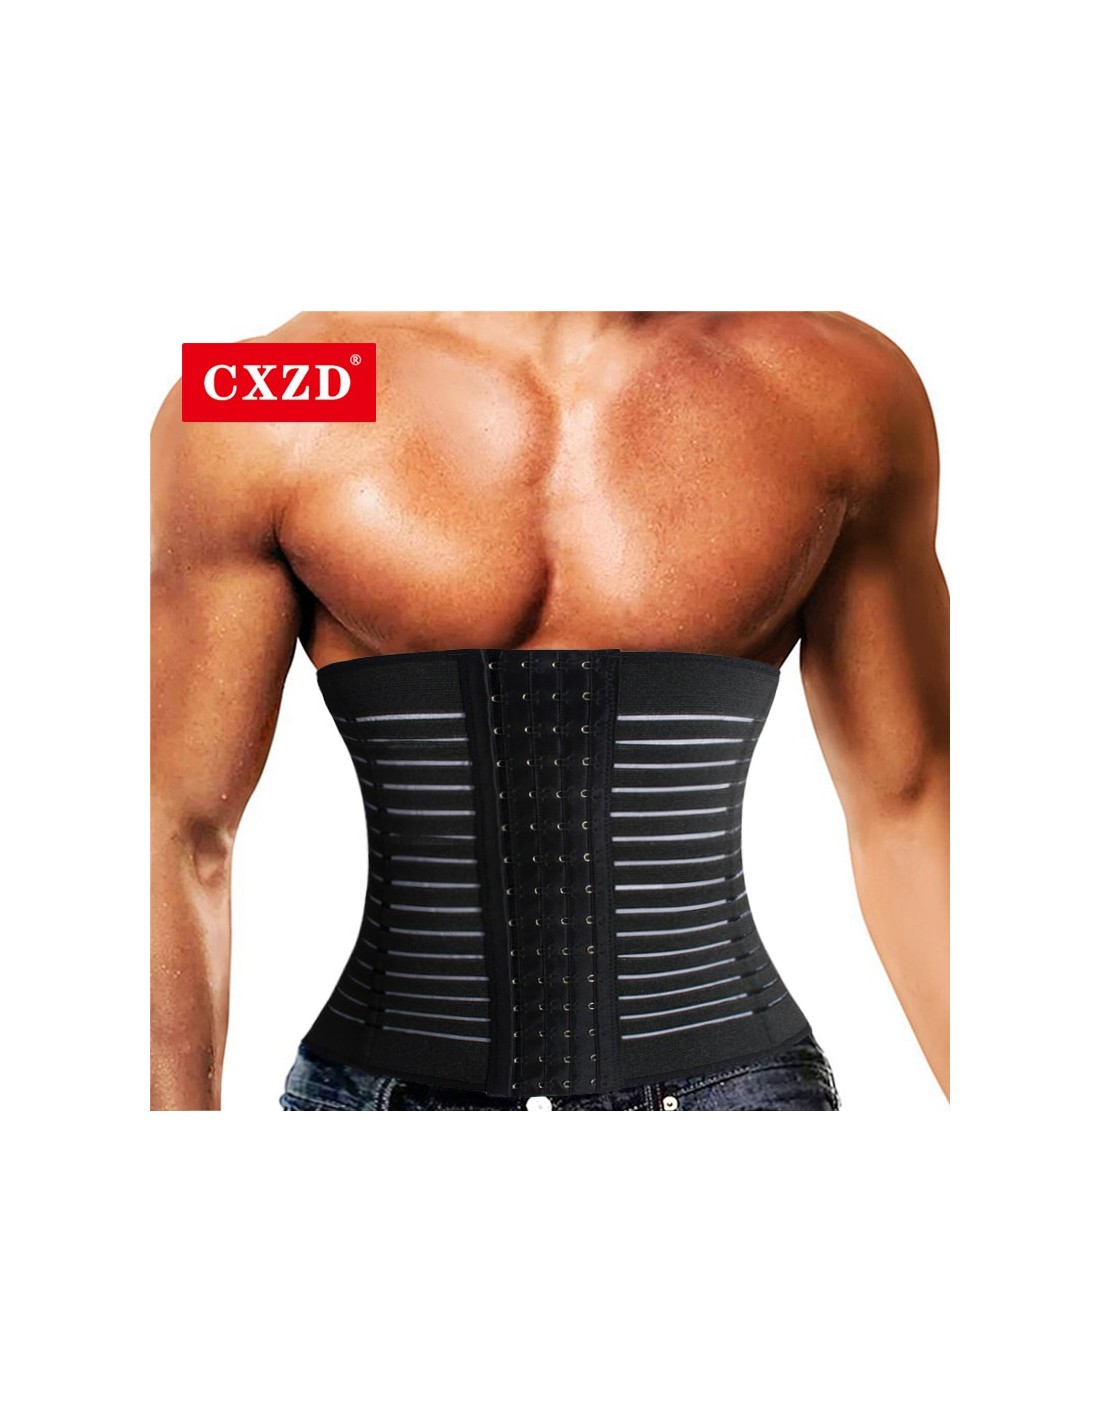 CXZD Newest Belt Men Sweat Shaper Body Breathable Modeling Tummy